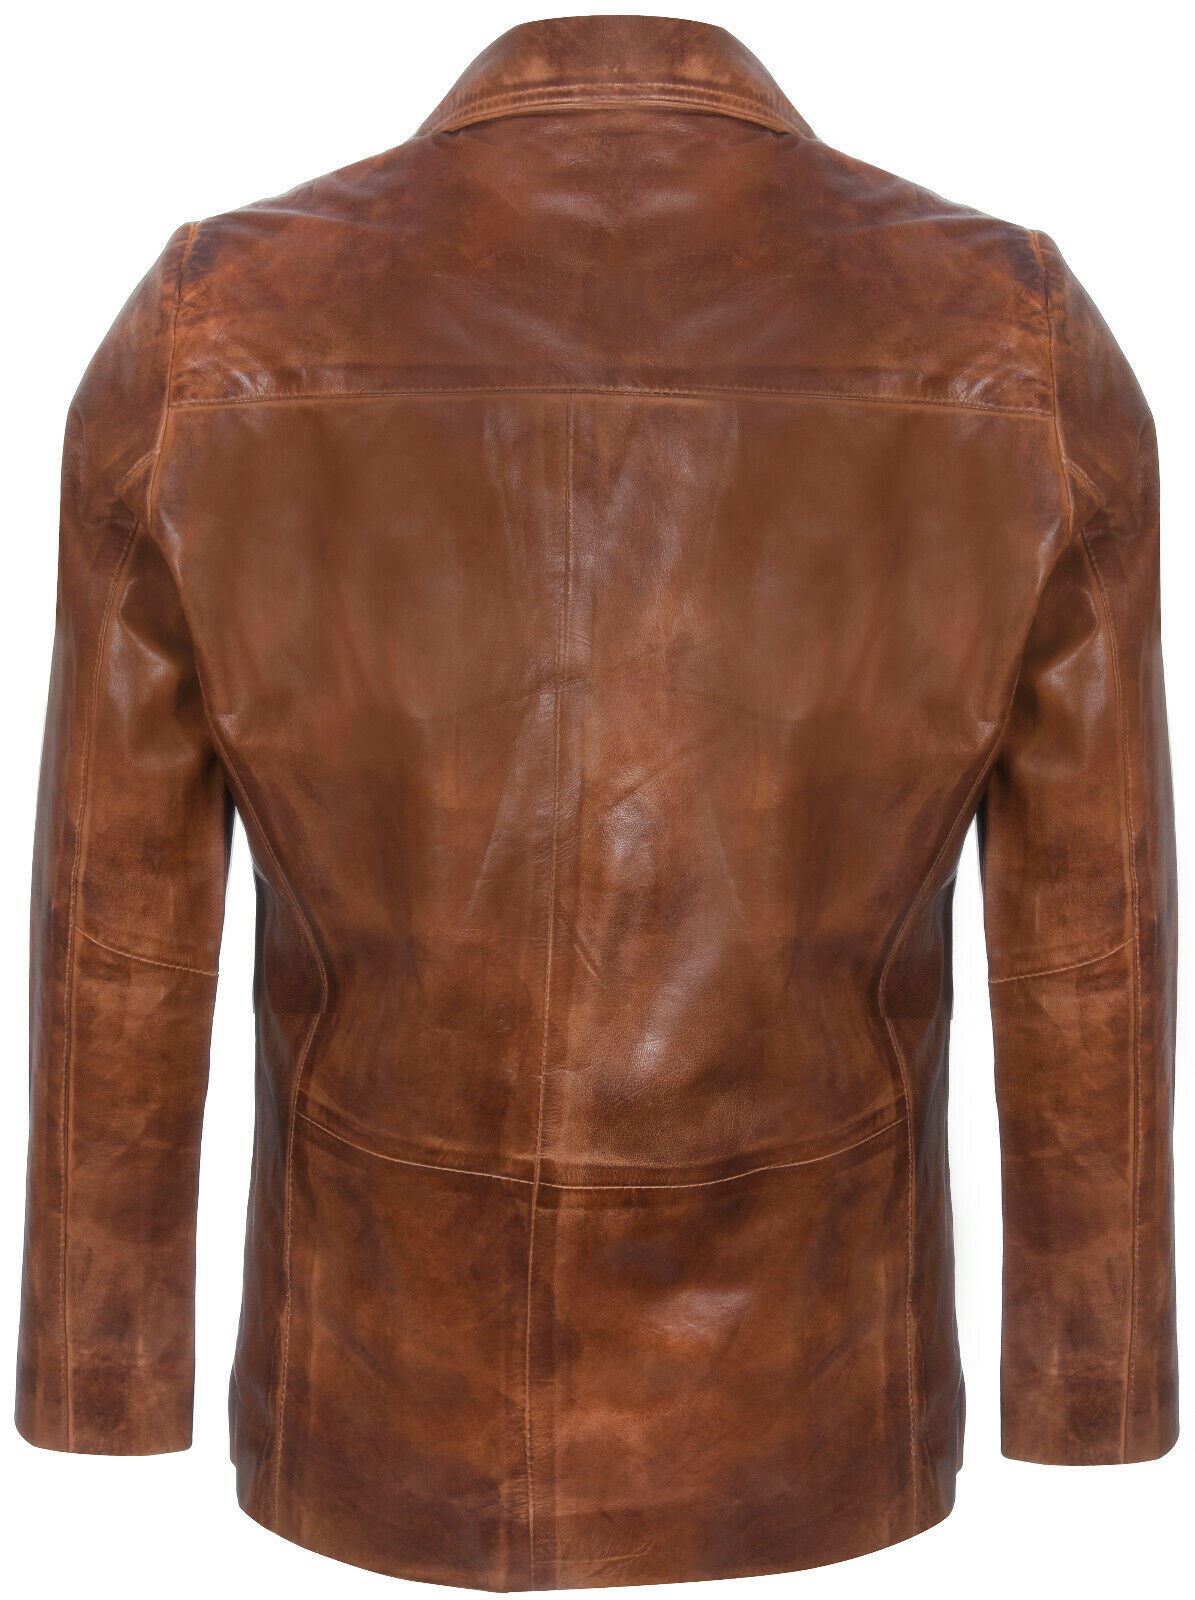 Mens Tan Leather Vintage Blazer Jacket-Dursley - Upperclass Fashions 